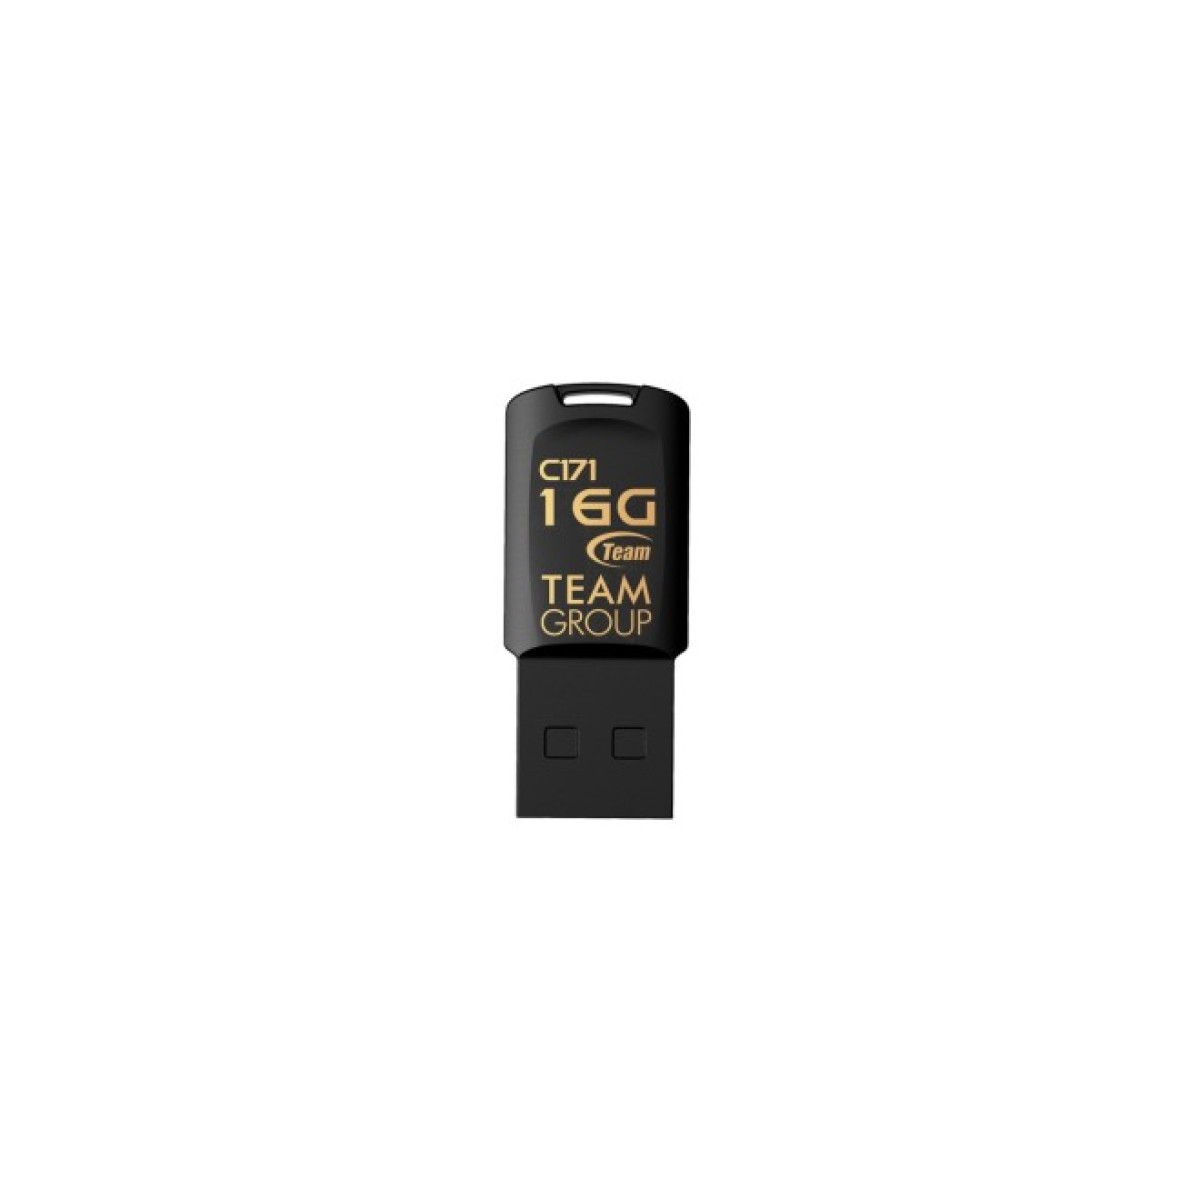 USB флеш накопитель Team 16GB C171 Black USB 2.0 (TC17116GB01) 256_256.jpg